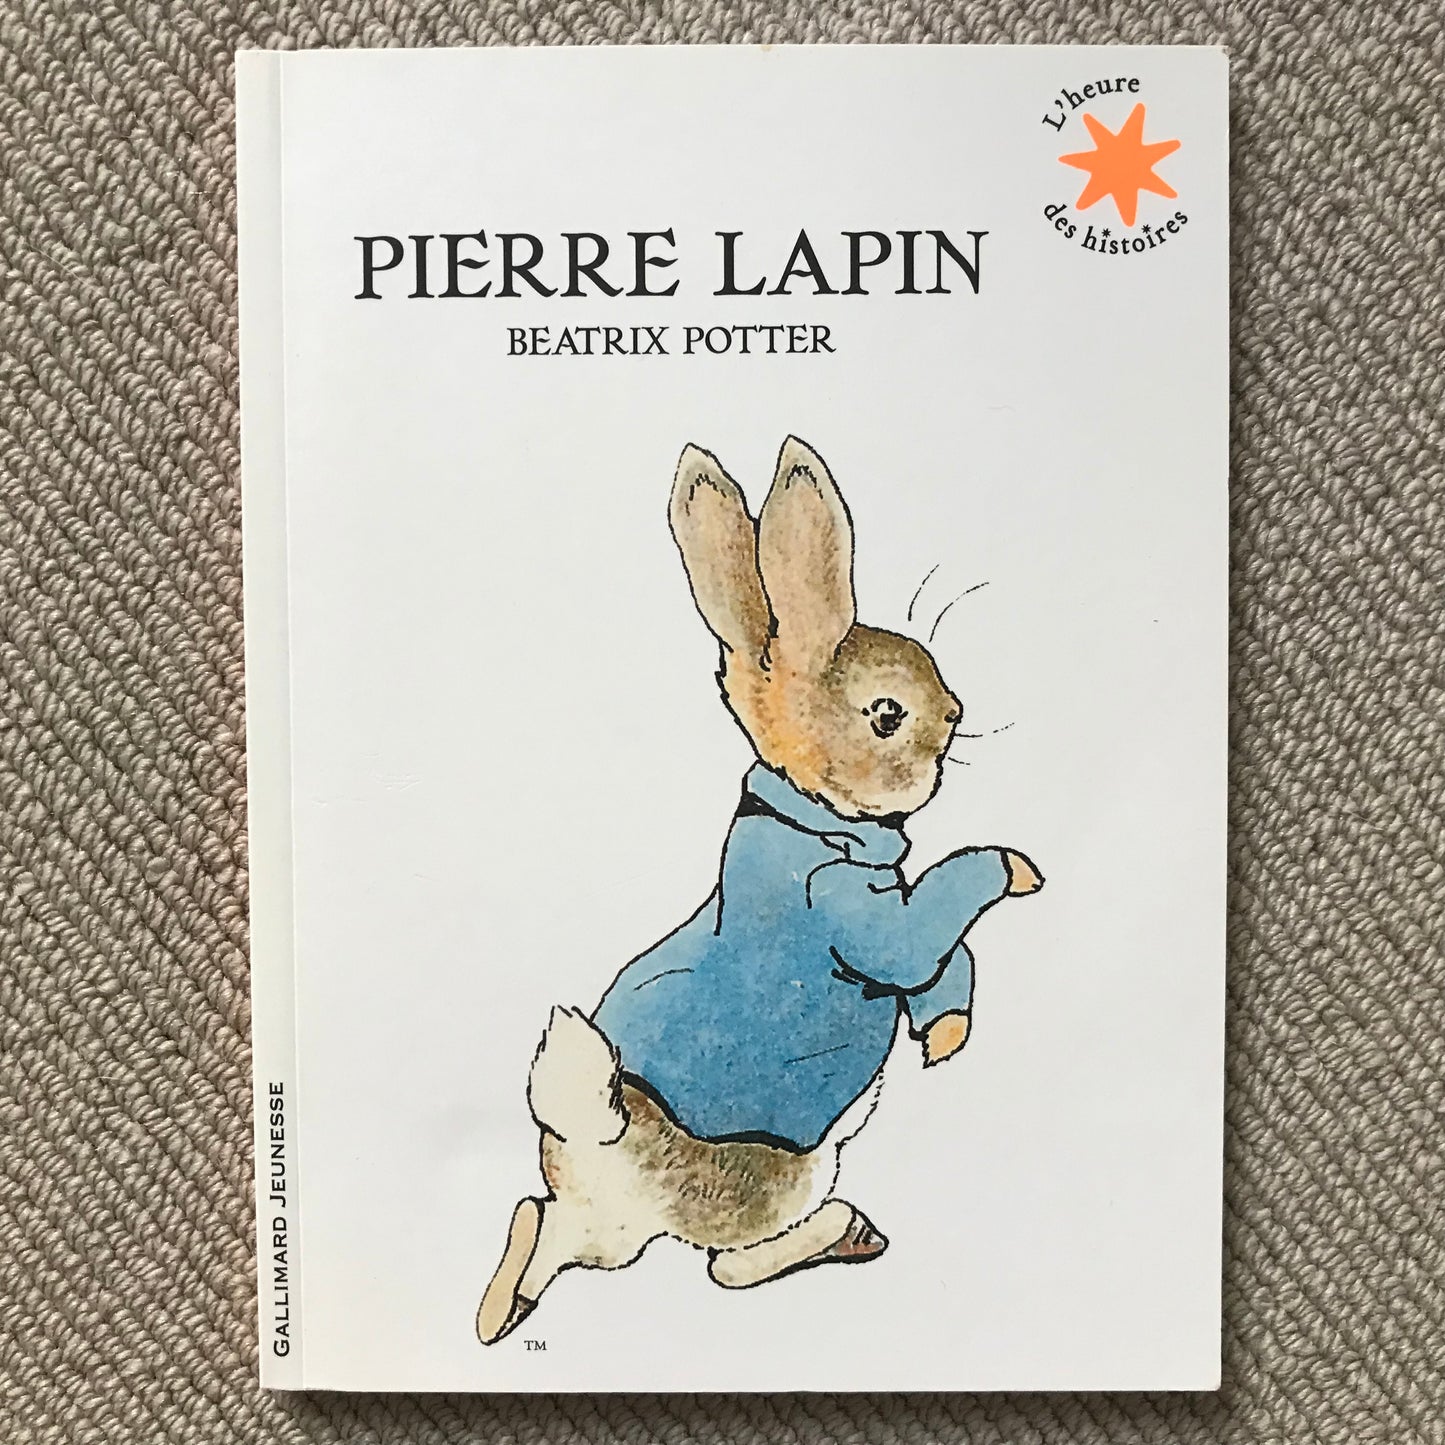 Potter, Beatrix - Pierre Lapin (includes CD)